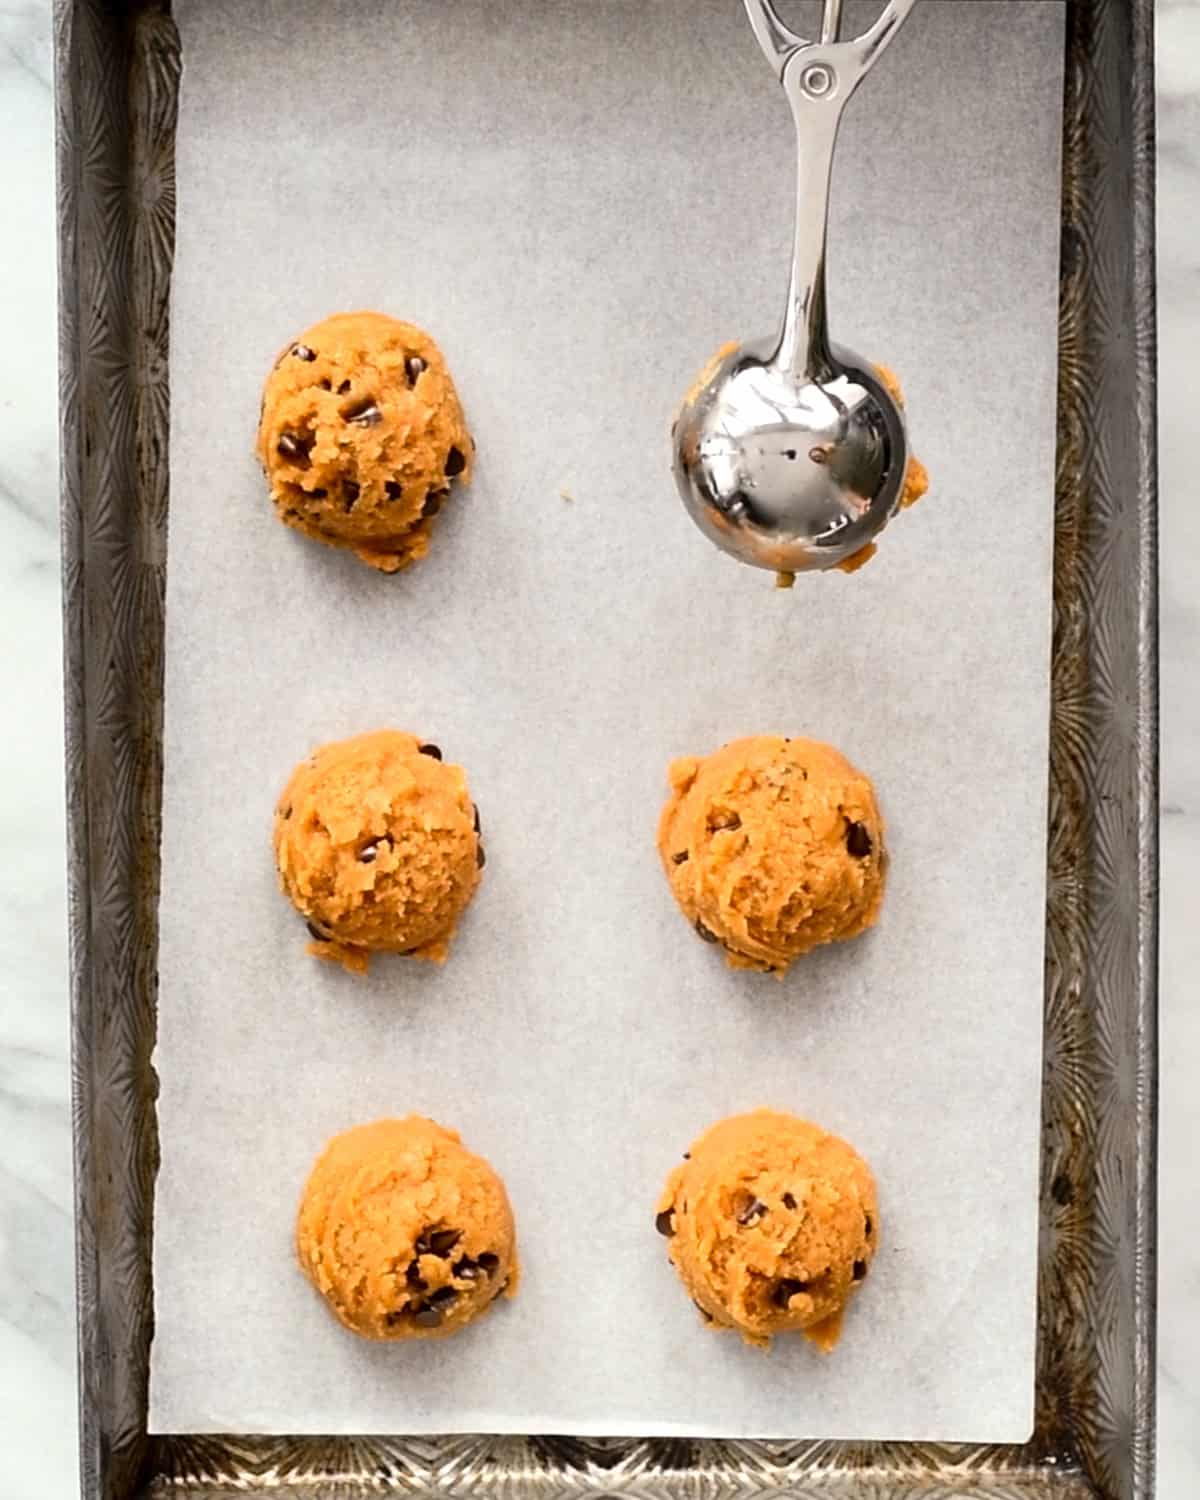 a cookie scoop measuring dough onto a baking sheet